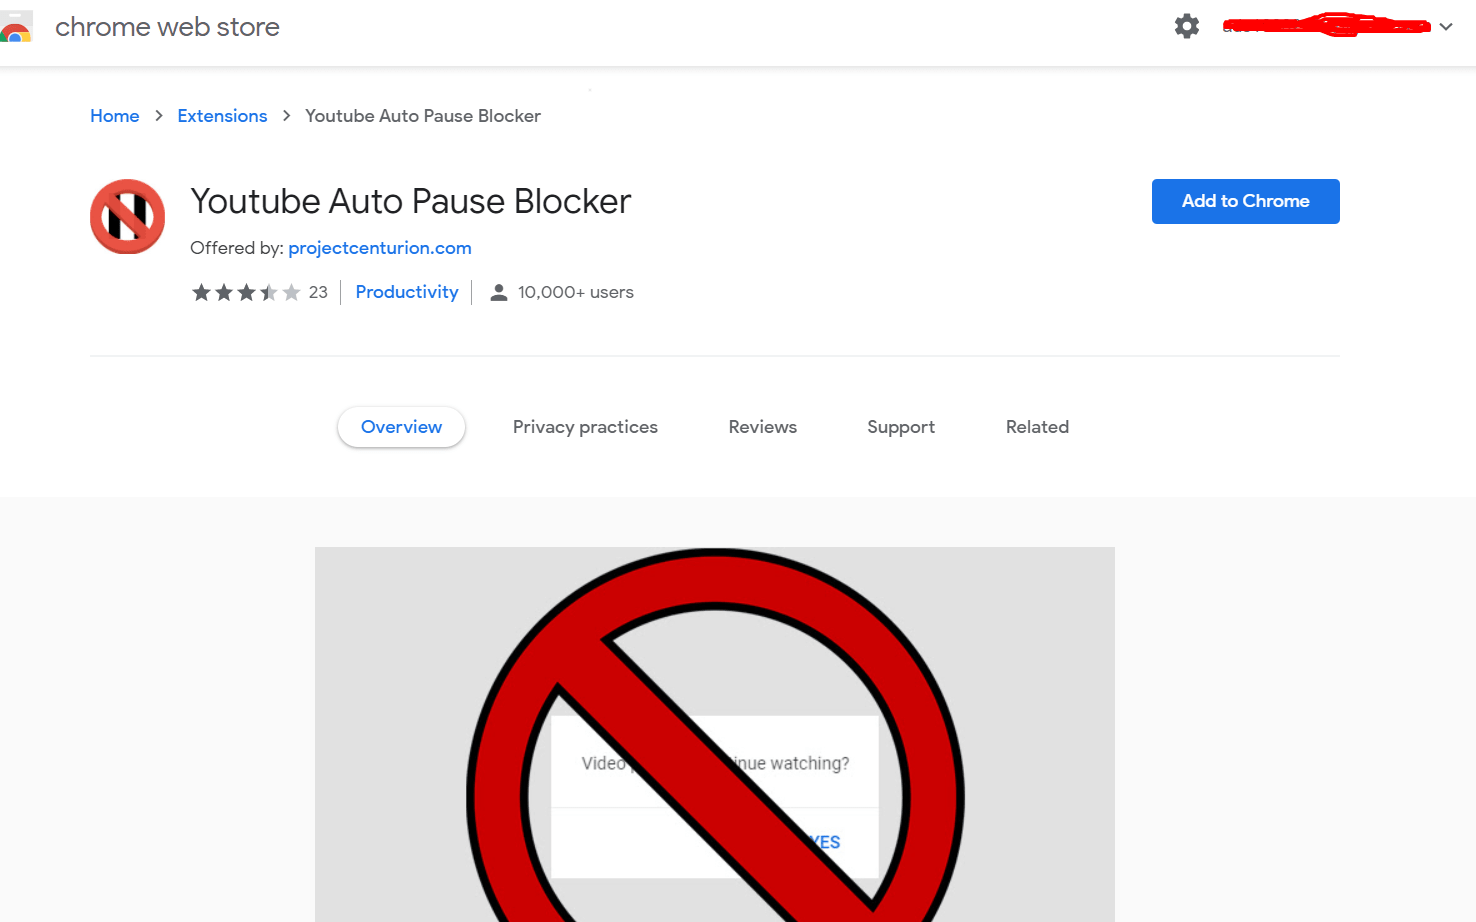 YouTube Auto Pause Blocker